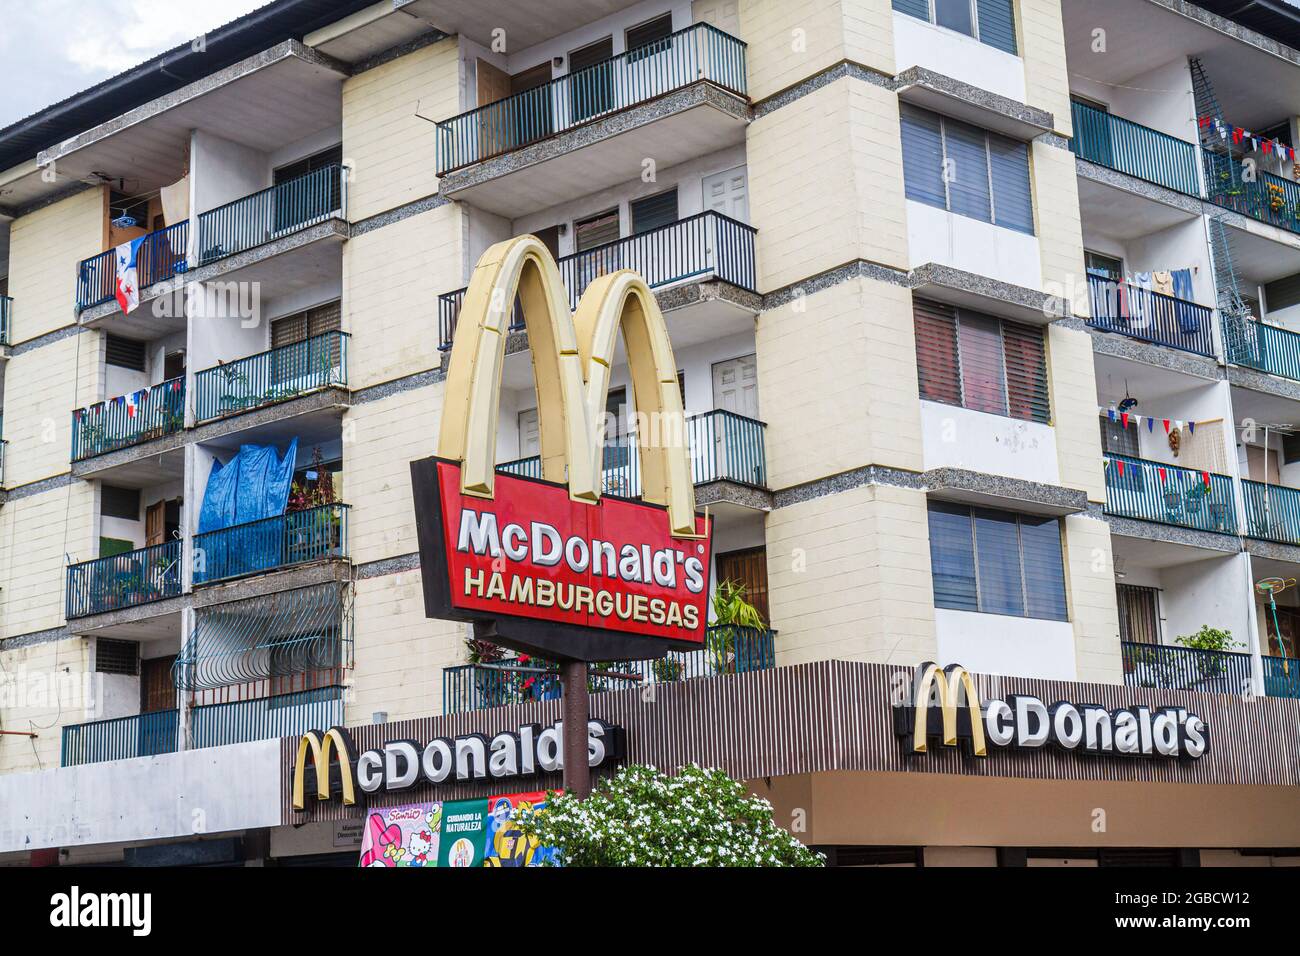 Panama Panama City Calidonia,condominium condo condos residential residences apartments flats building mixed use,McDonald's fast food restaurant Spani Stock Photo